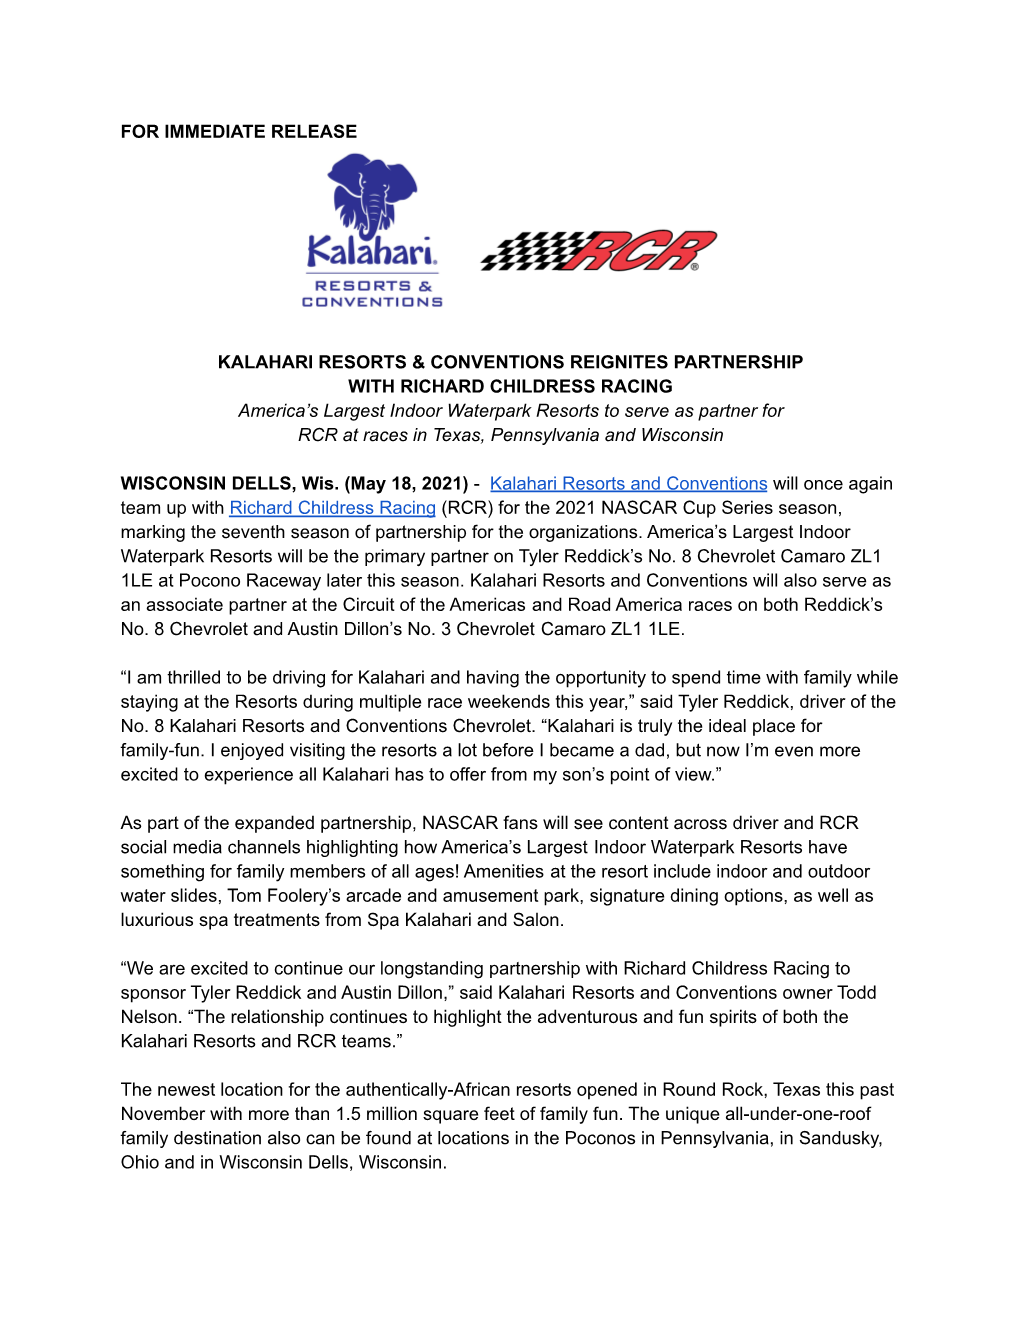 Kalahari Resorts & Conventions Reignites Partnership with Richard Childress Racing May 18, 2021